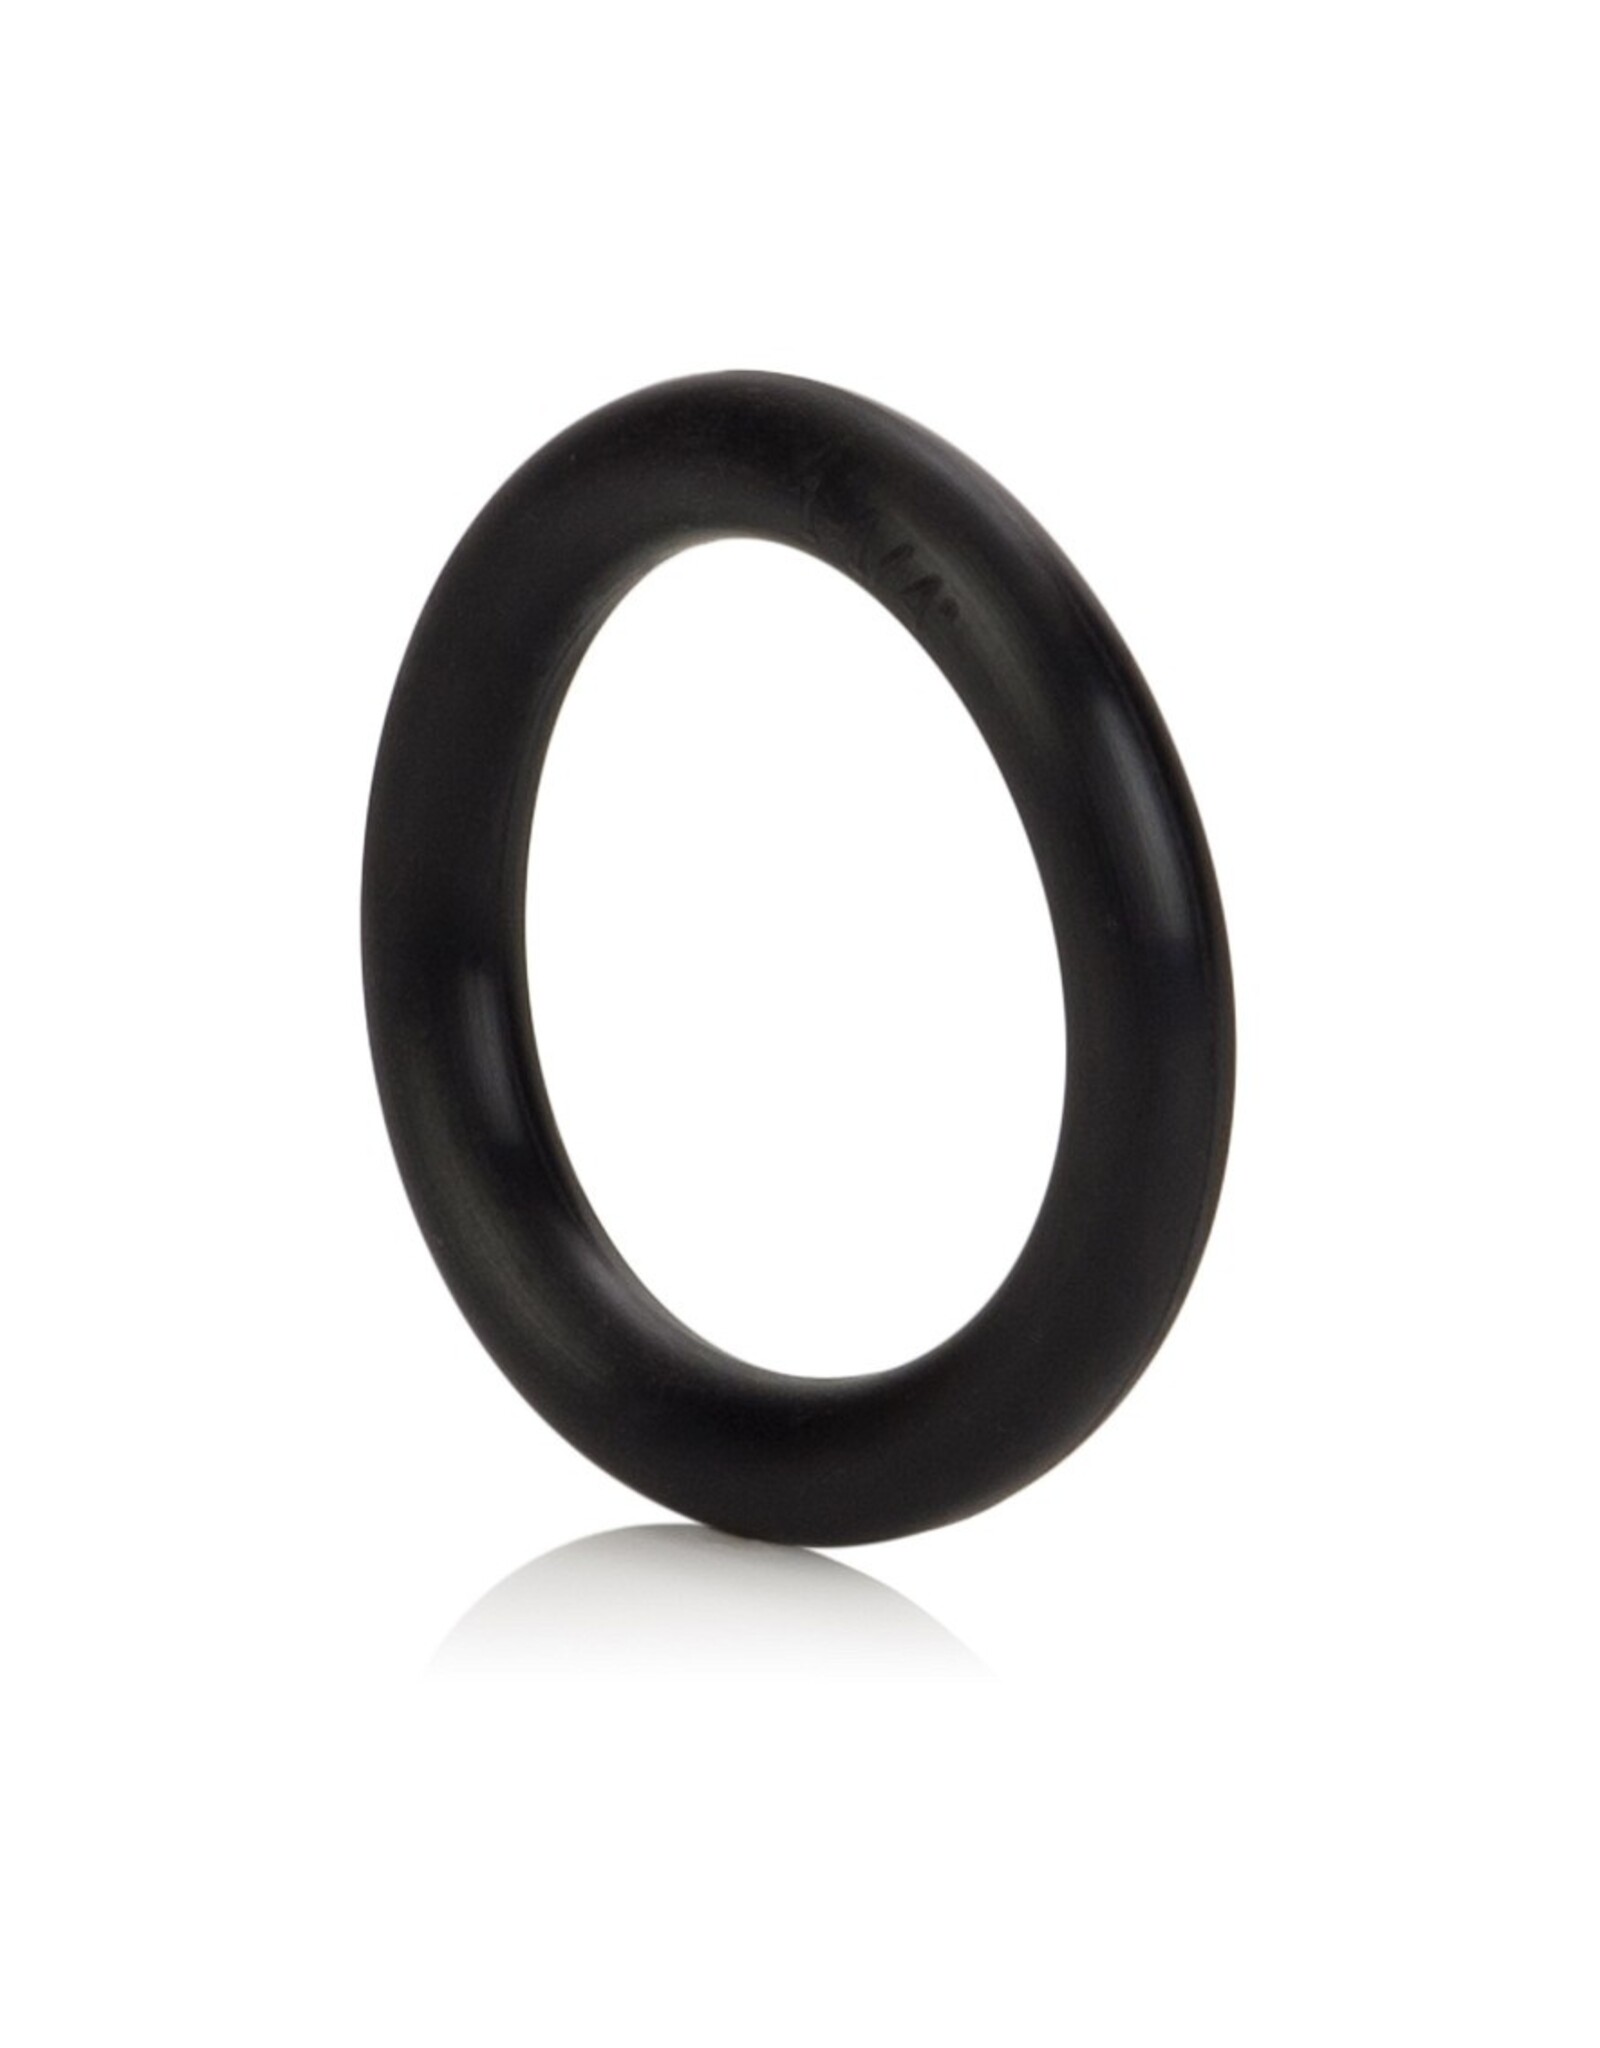 Colt CalExotics Black Rubber Cock Ring - Small